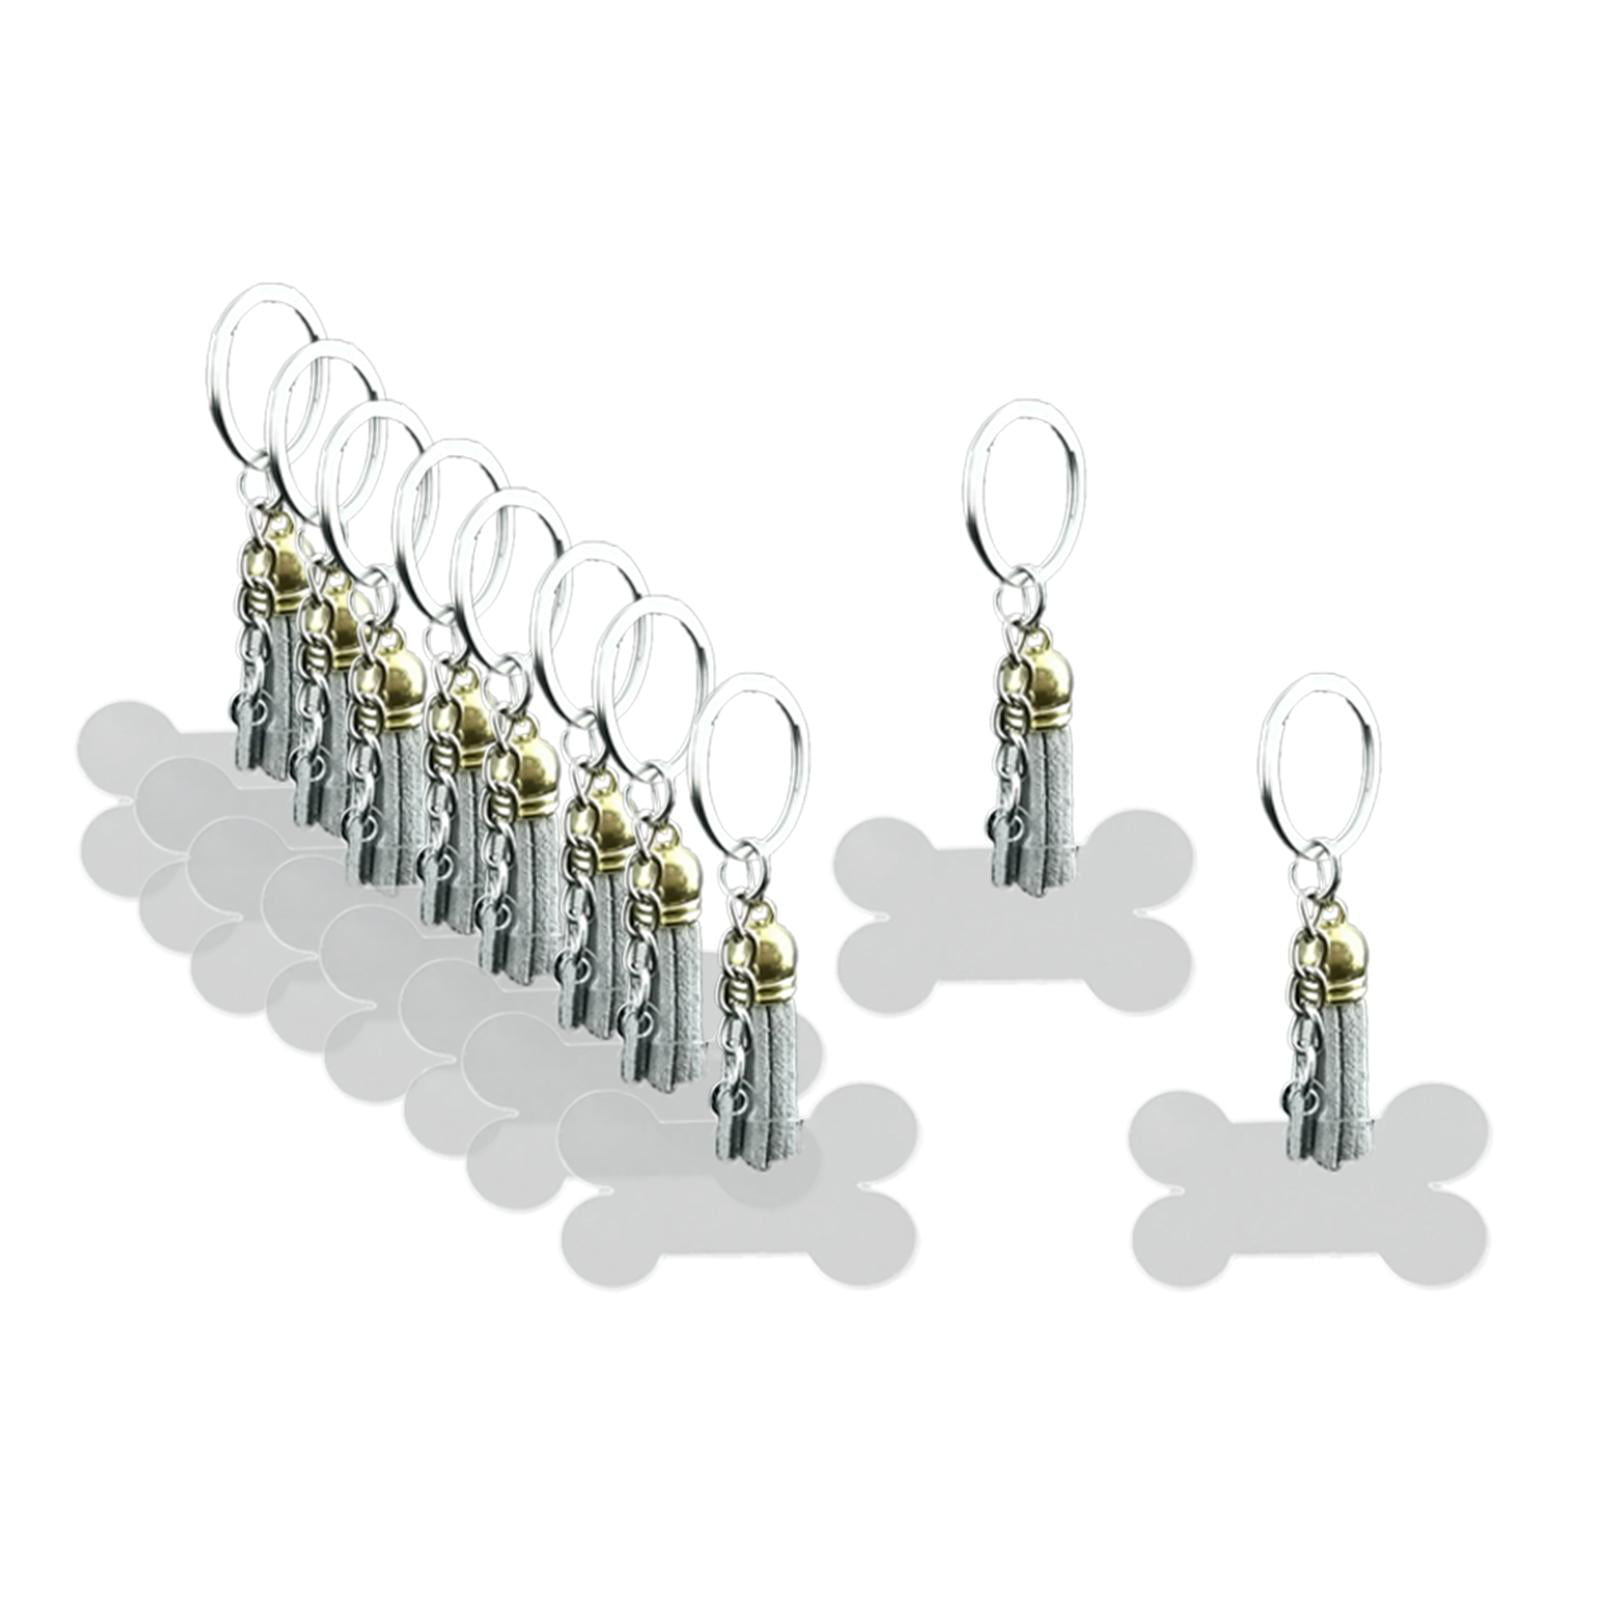 10 Acrylic Transparent Key Chains Set Bone Shaped Acrylic Keychain Blanks 